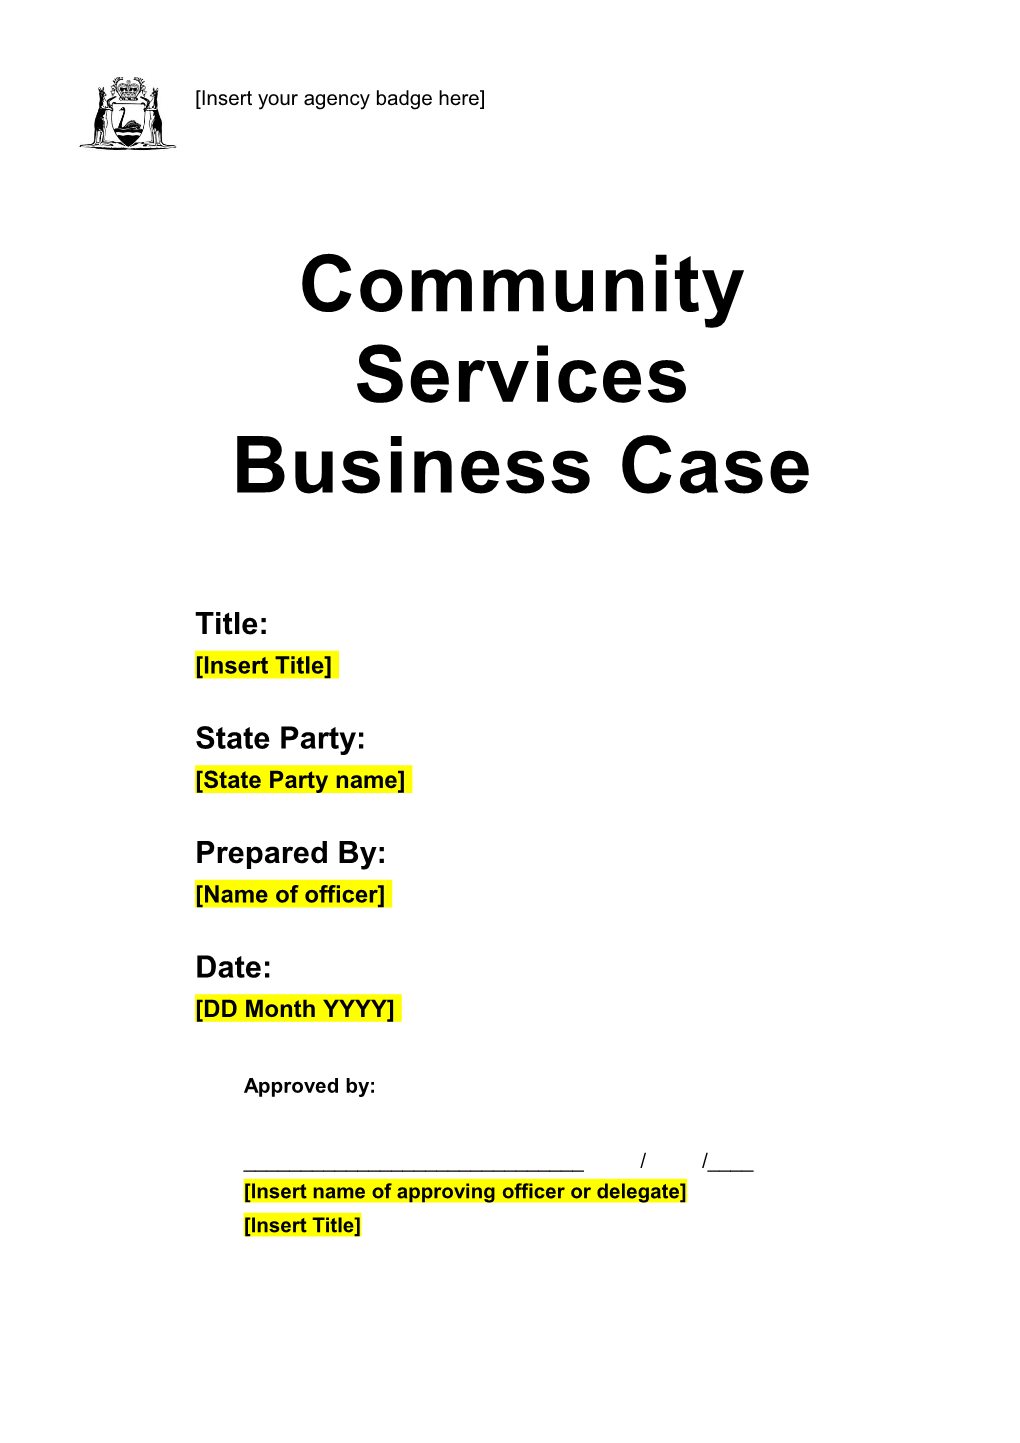 Community Services - Business Case